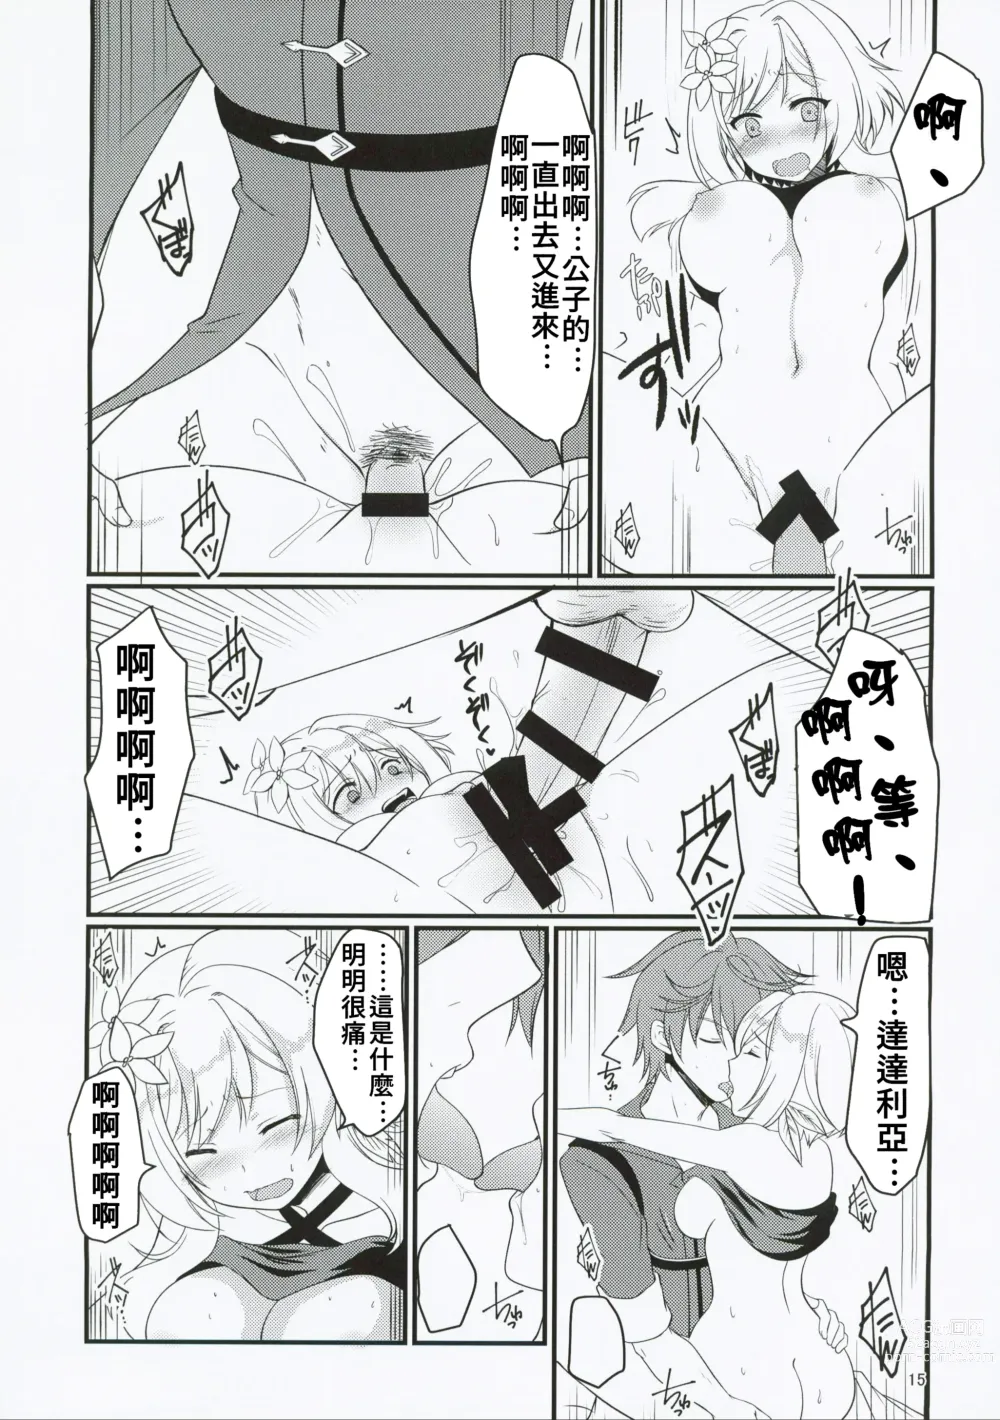 Page 15 of doujinshi 那裡是做什麼的我當然知道!